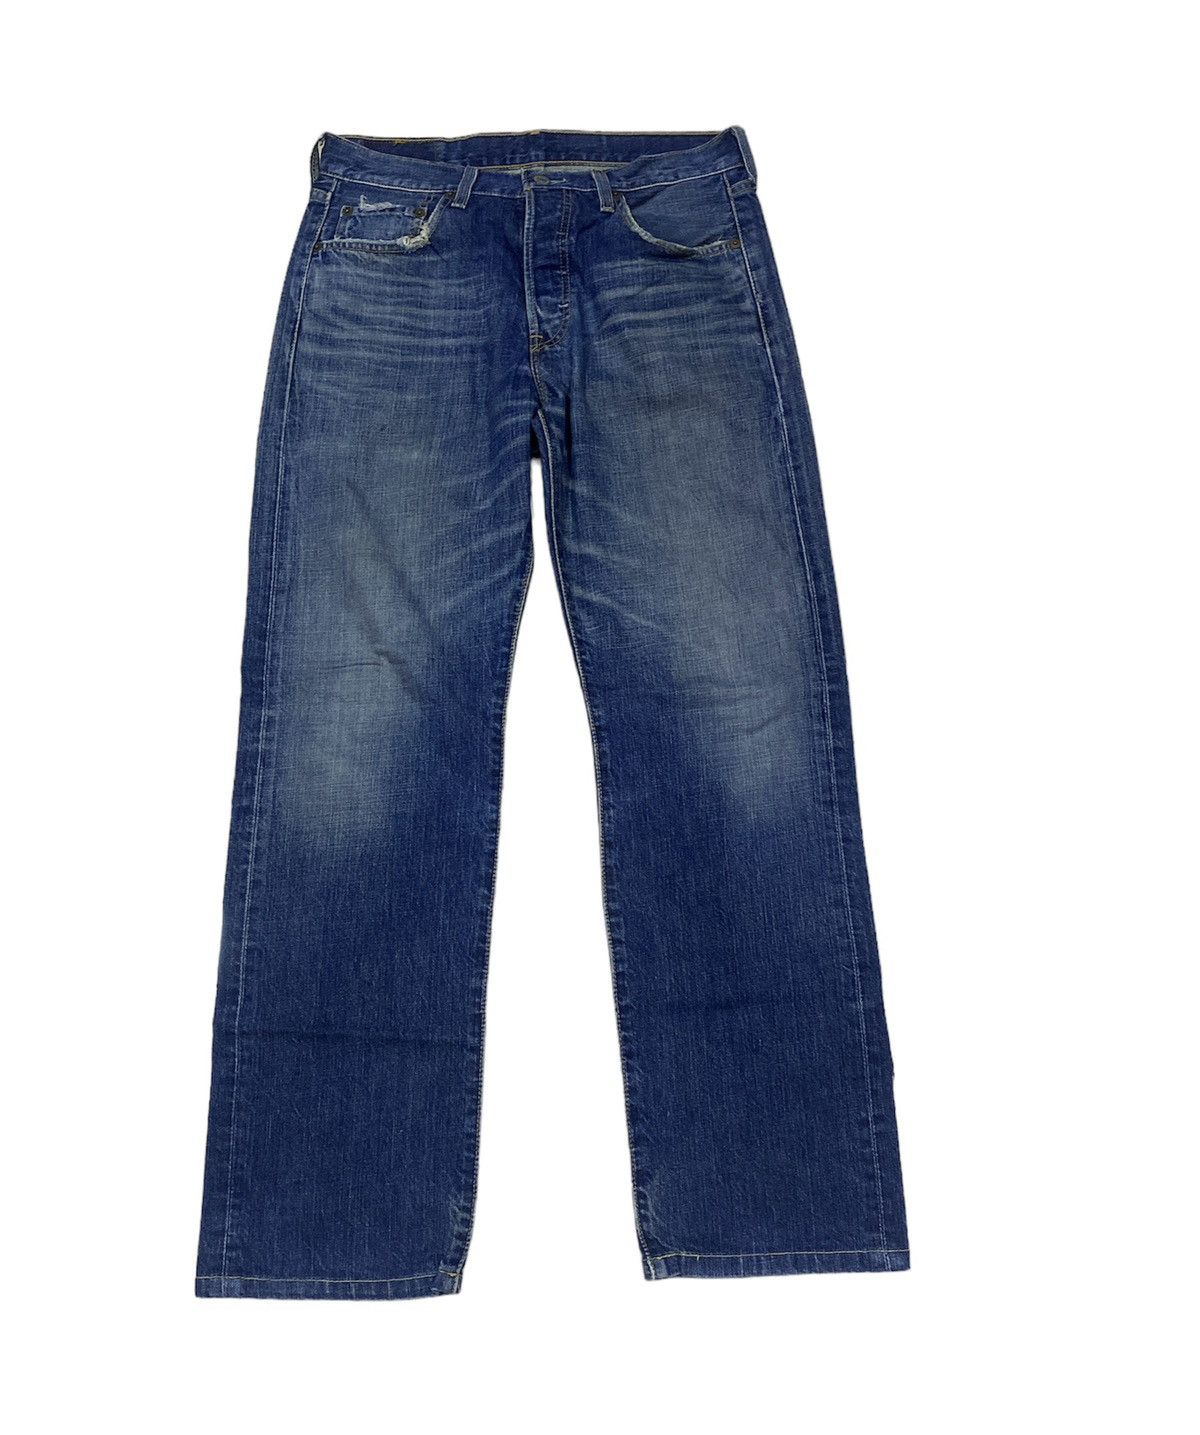 Levi’s San Francisco 501 Denim Jeans - 3